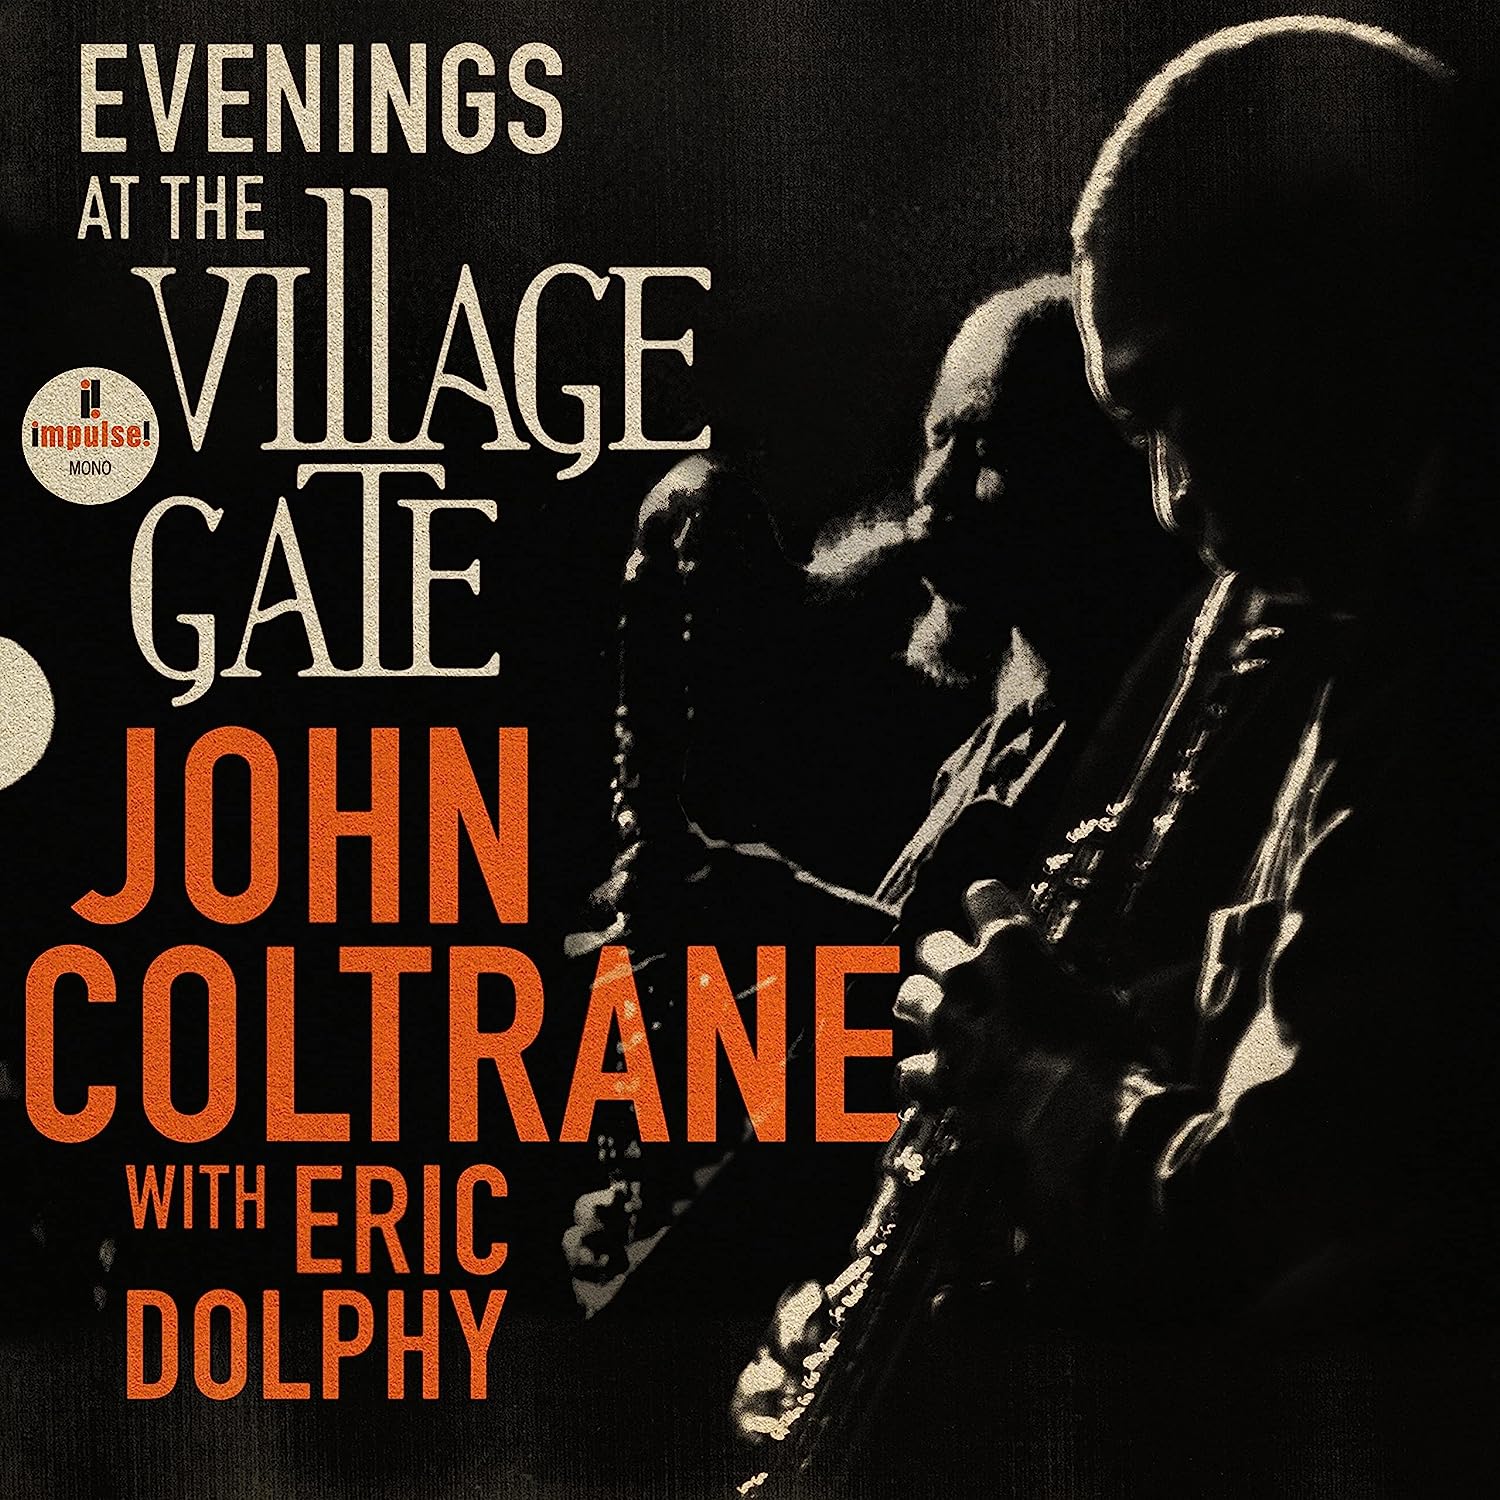 JOHN COLTRANE + ERIC DOLPHY - EVENINGS AT THE VILLAGE GATE Vinyl LP